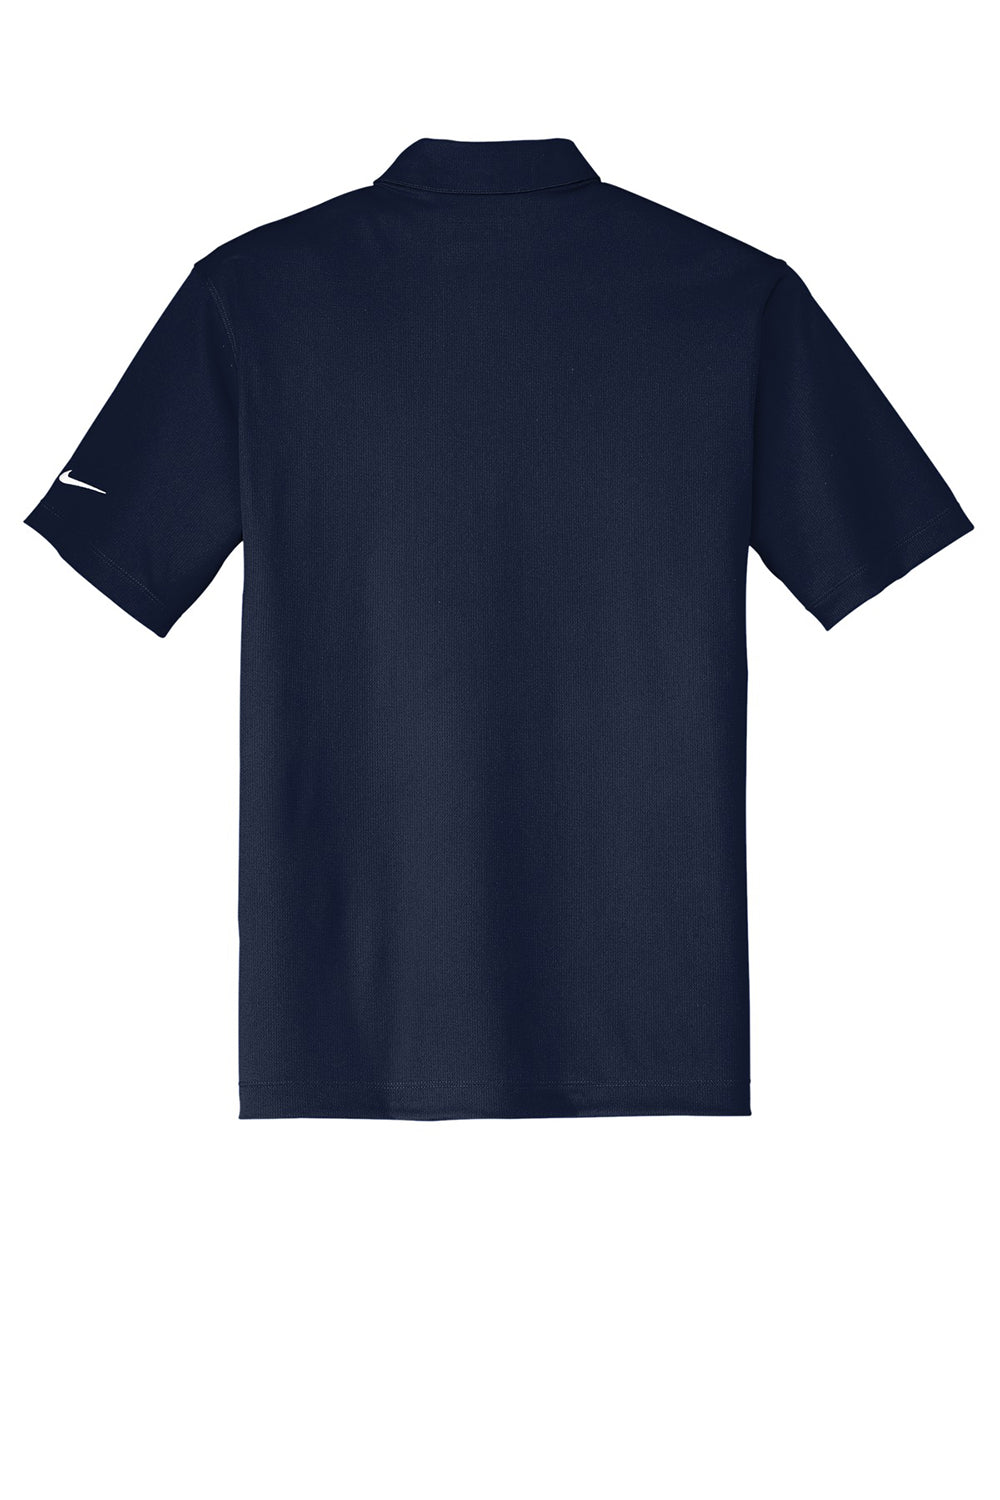 Nike 637167 Mens Dri-Fit Moisture Wicking Short Sleeve Polo Shirt Marine Blue Flat Back